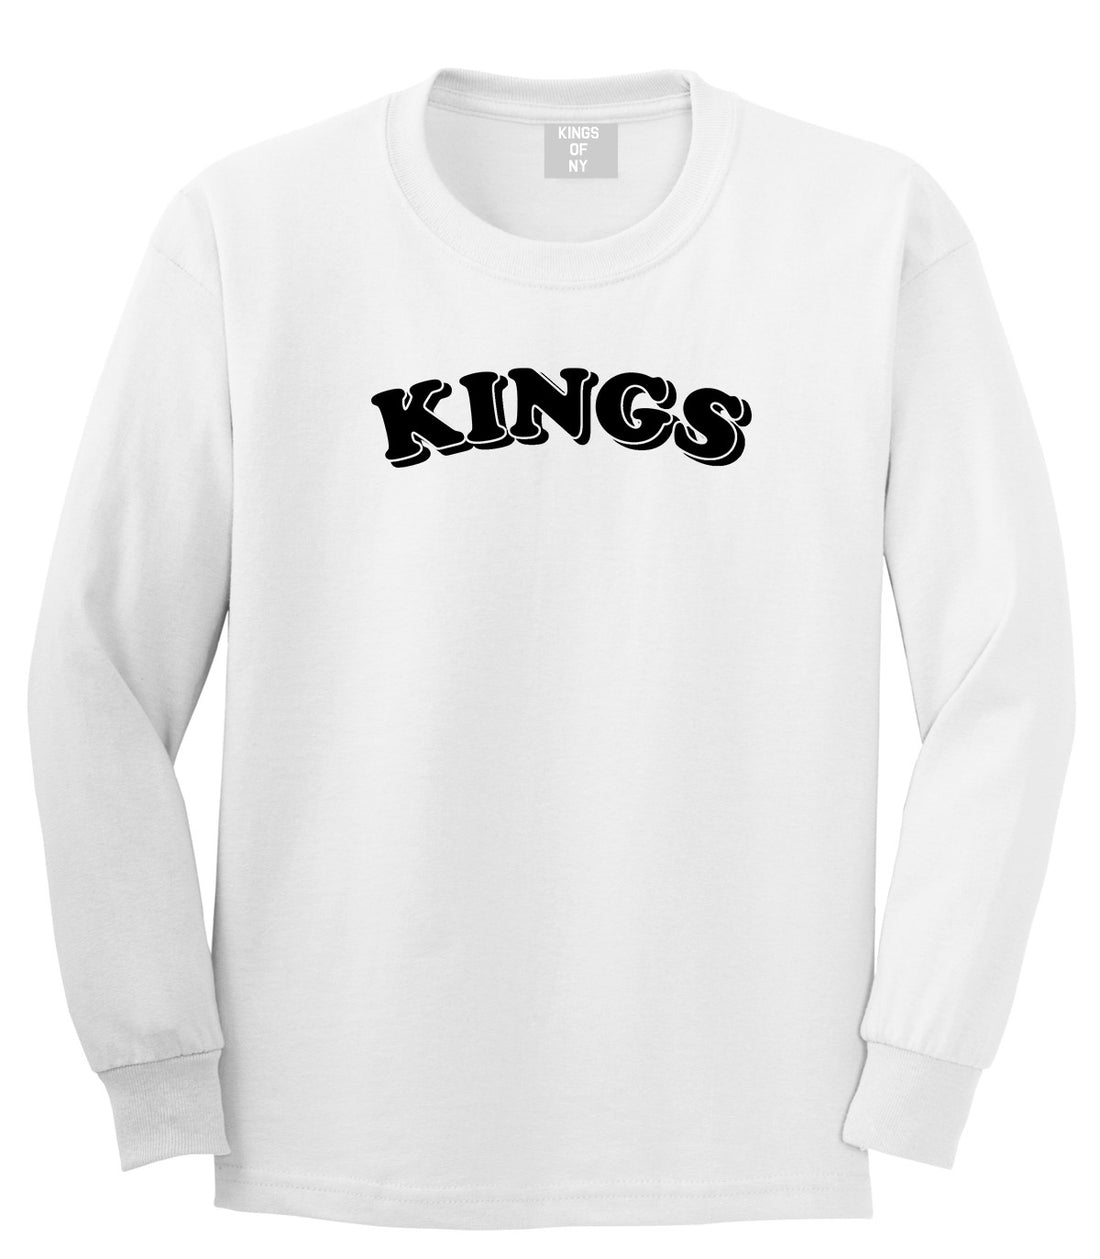 KINGS Bubble Letters Long Sleeve T-Shirt in White